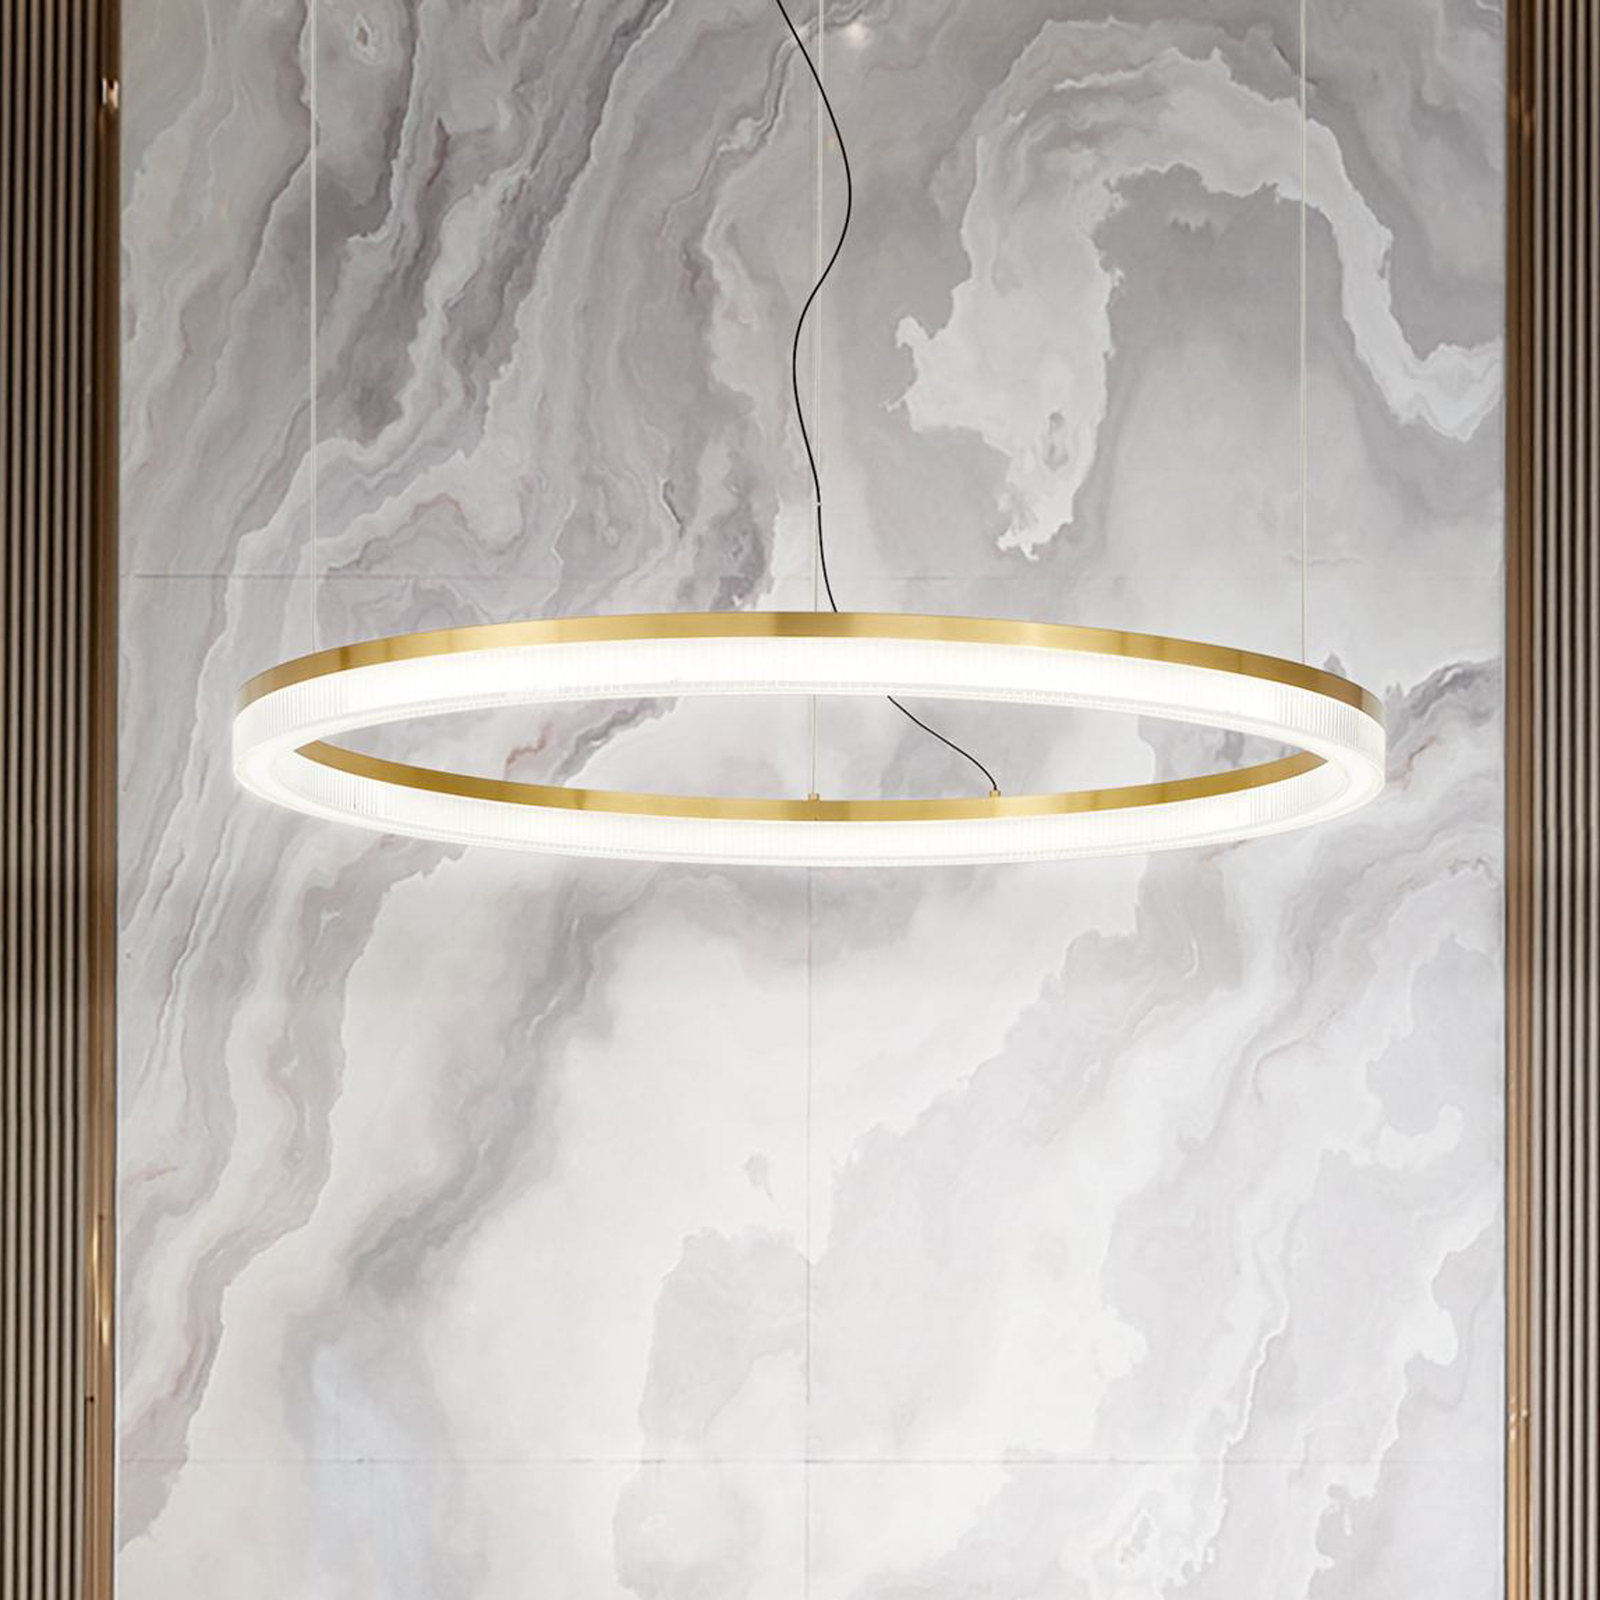 Ideal Lux LED hanging light Crown Ø 80 cm, brass-coloured metal